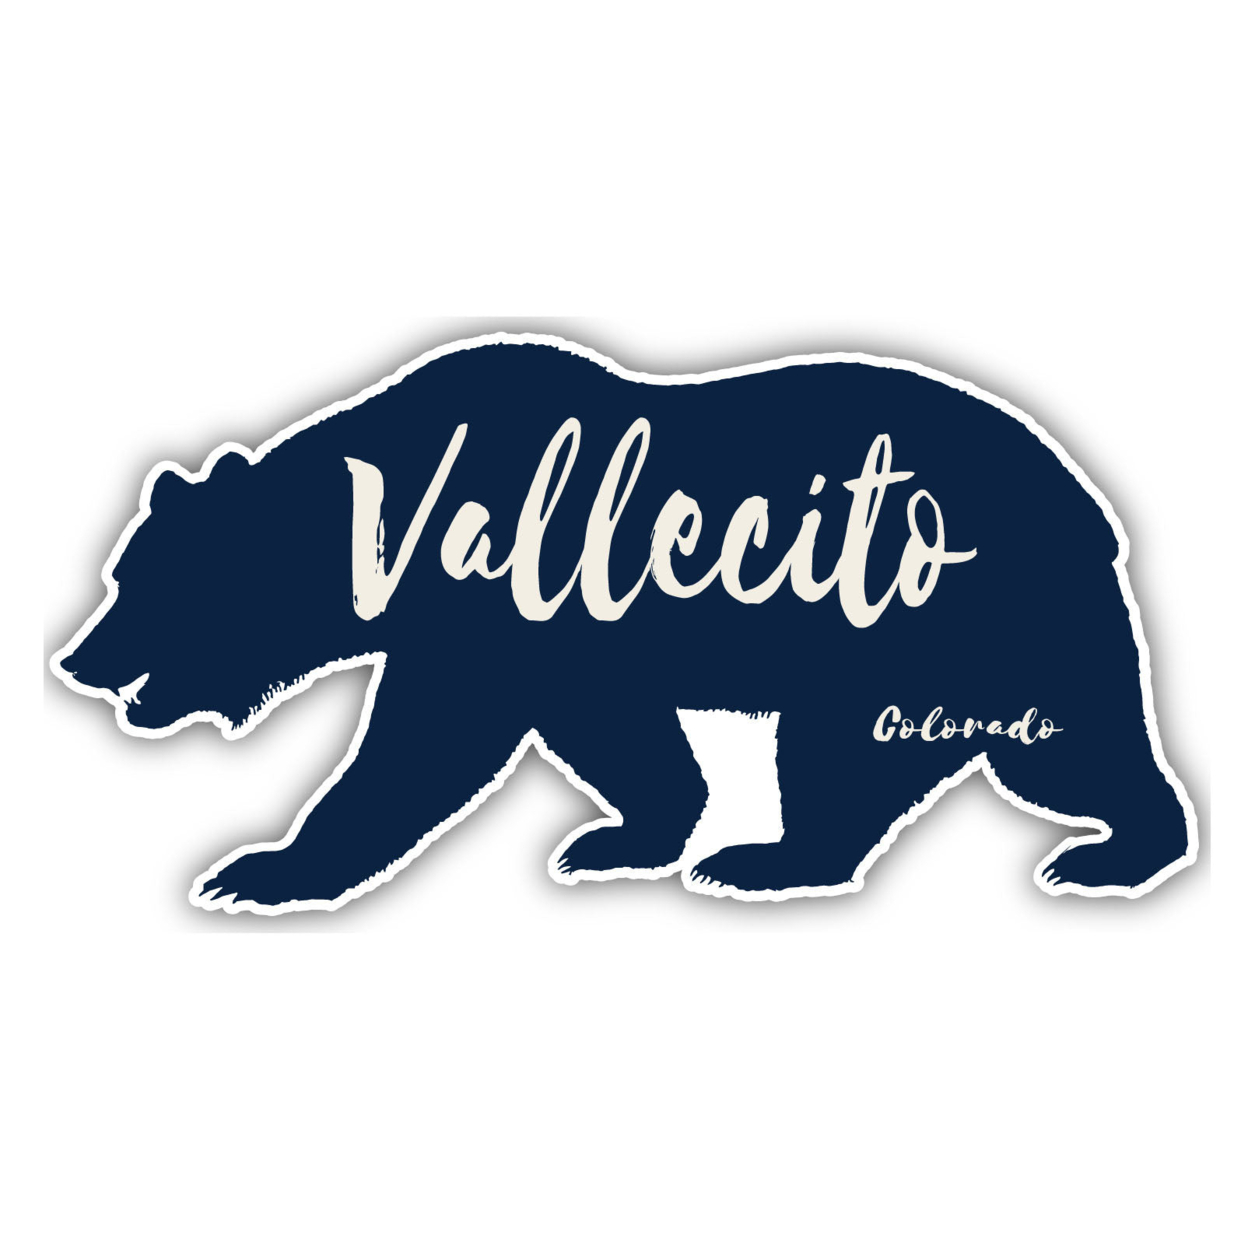 Vallecito Colorado Souvenir Decorative Stickers (Choose Theme And Size) - Single Unit, 4-Inch, Bear